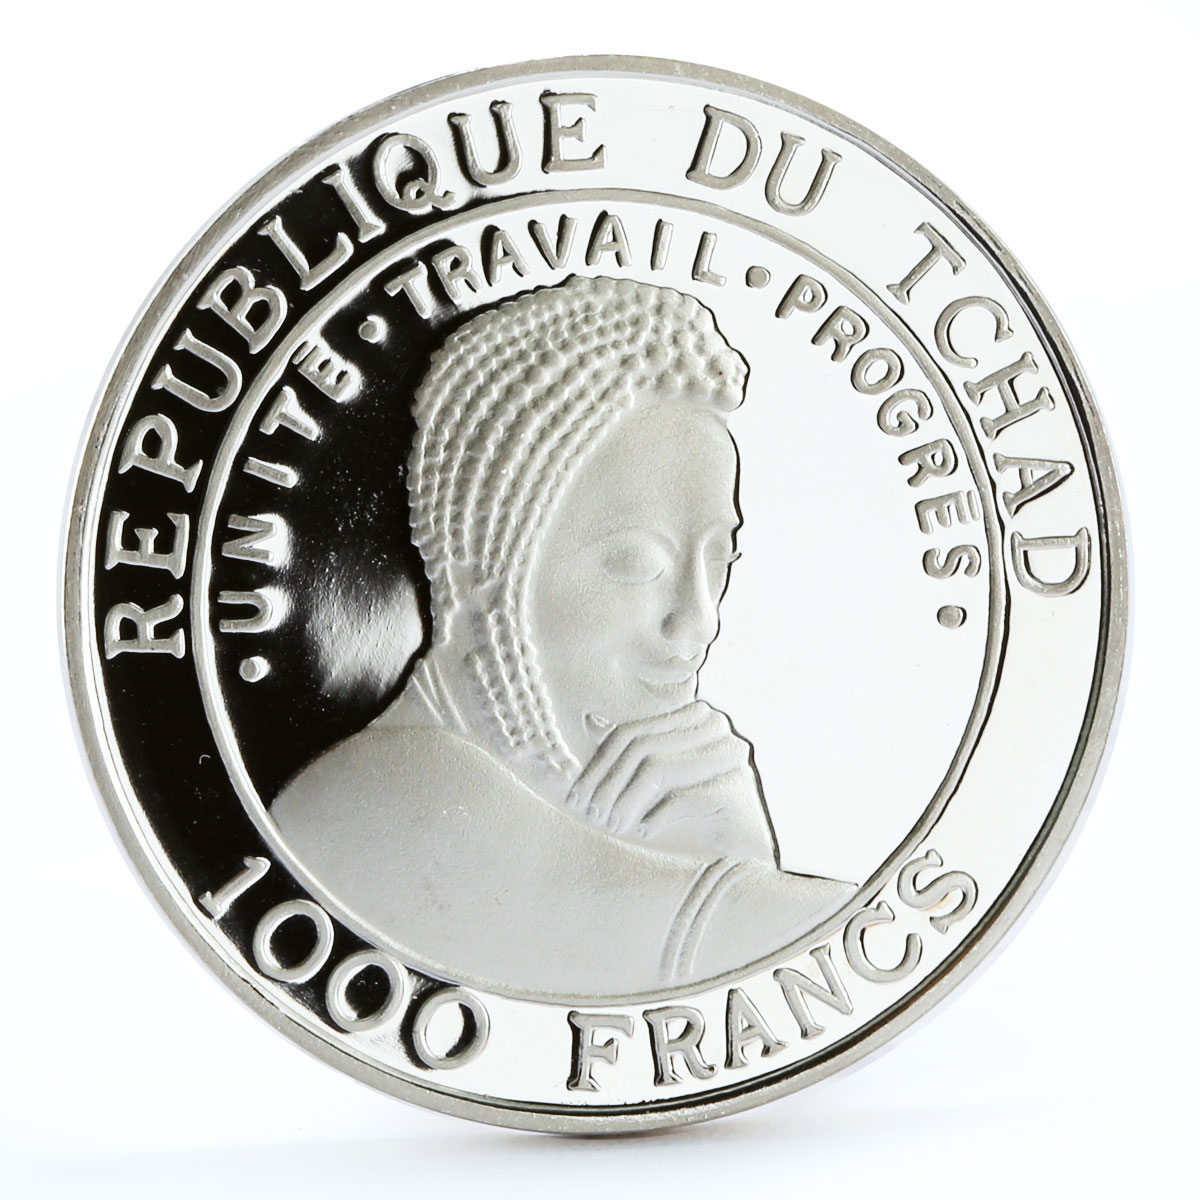 Chad 1000 francs Endangered Wildlife Okapi Johnson Fauna silver coin 1999